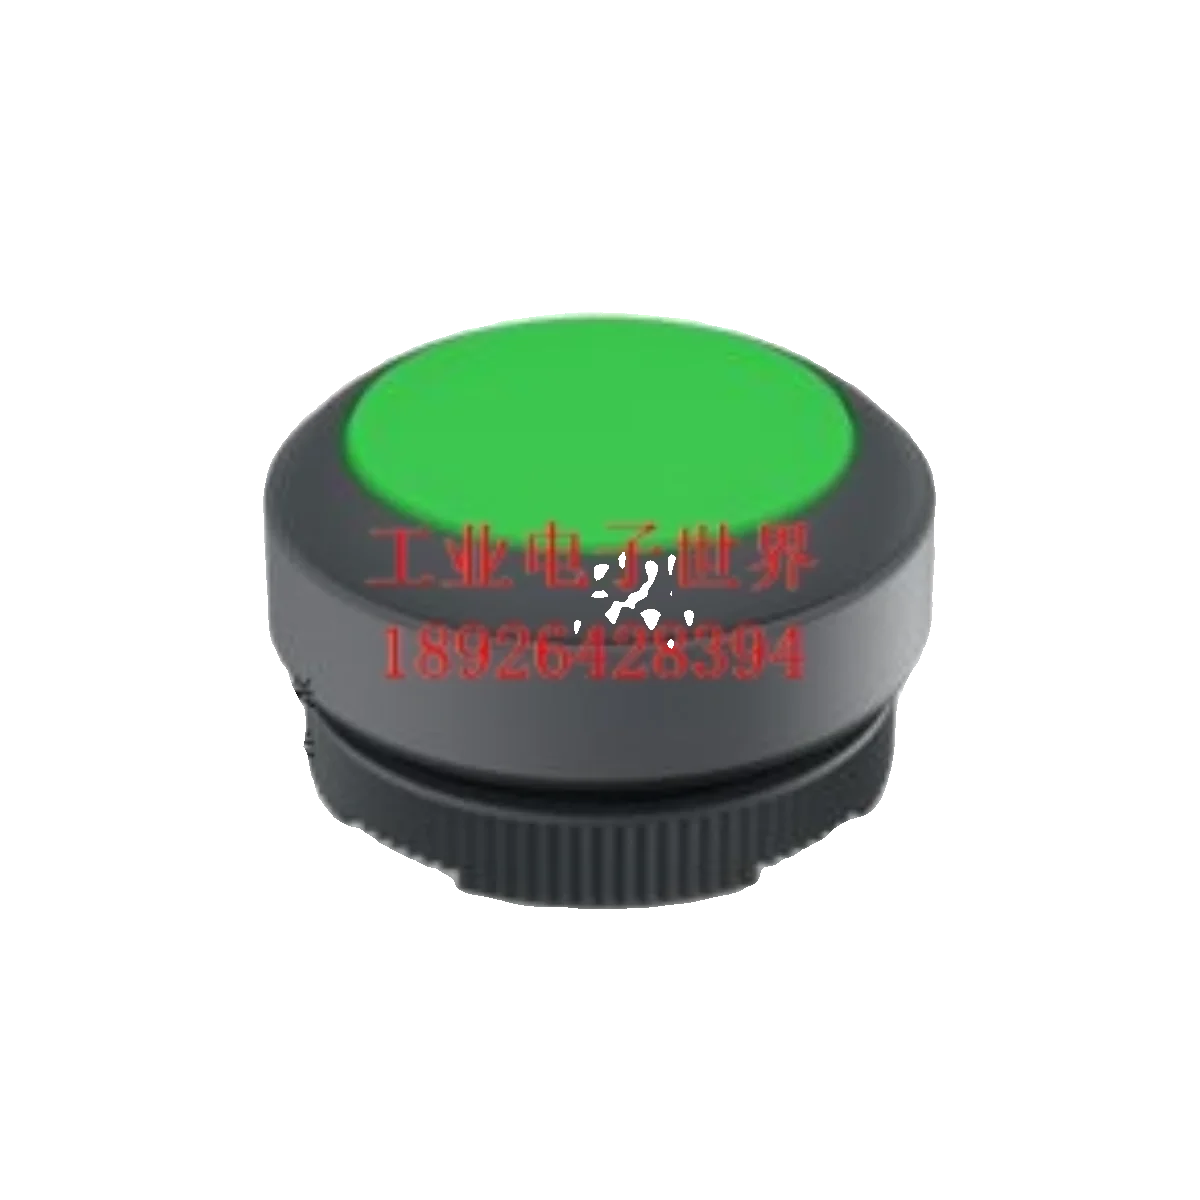 

1.30.270.001/2501 RAFI push button Switch RAFIX 22 FS+ Light button self reset green